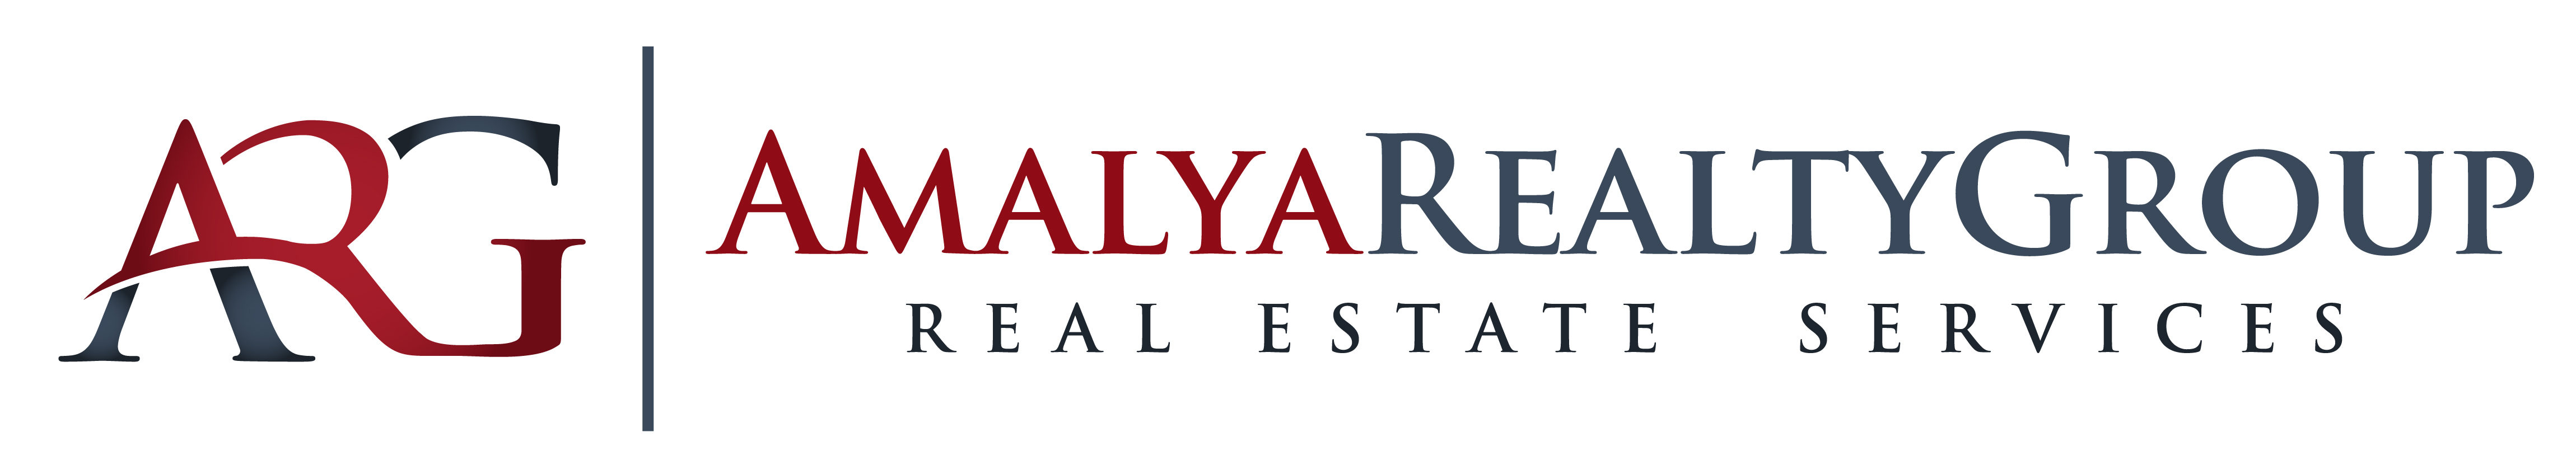 http://amalyarealtygroup.com/wp-content/uploads/2017/08/cropped-AmalyaRealtyGroup_real-estate-services_big-darker-01.jpg